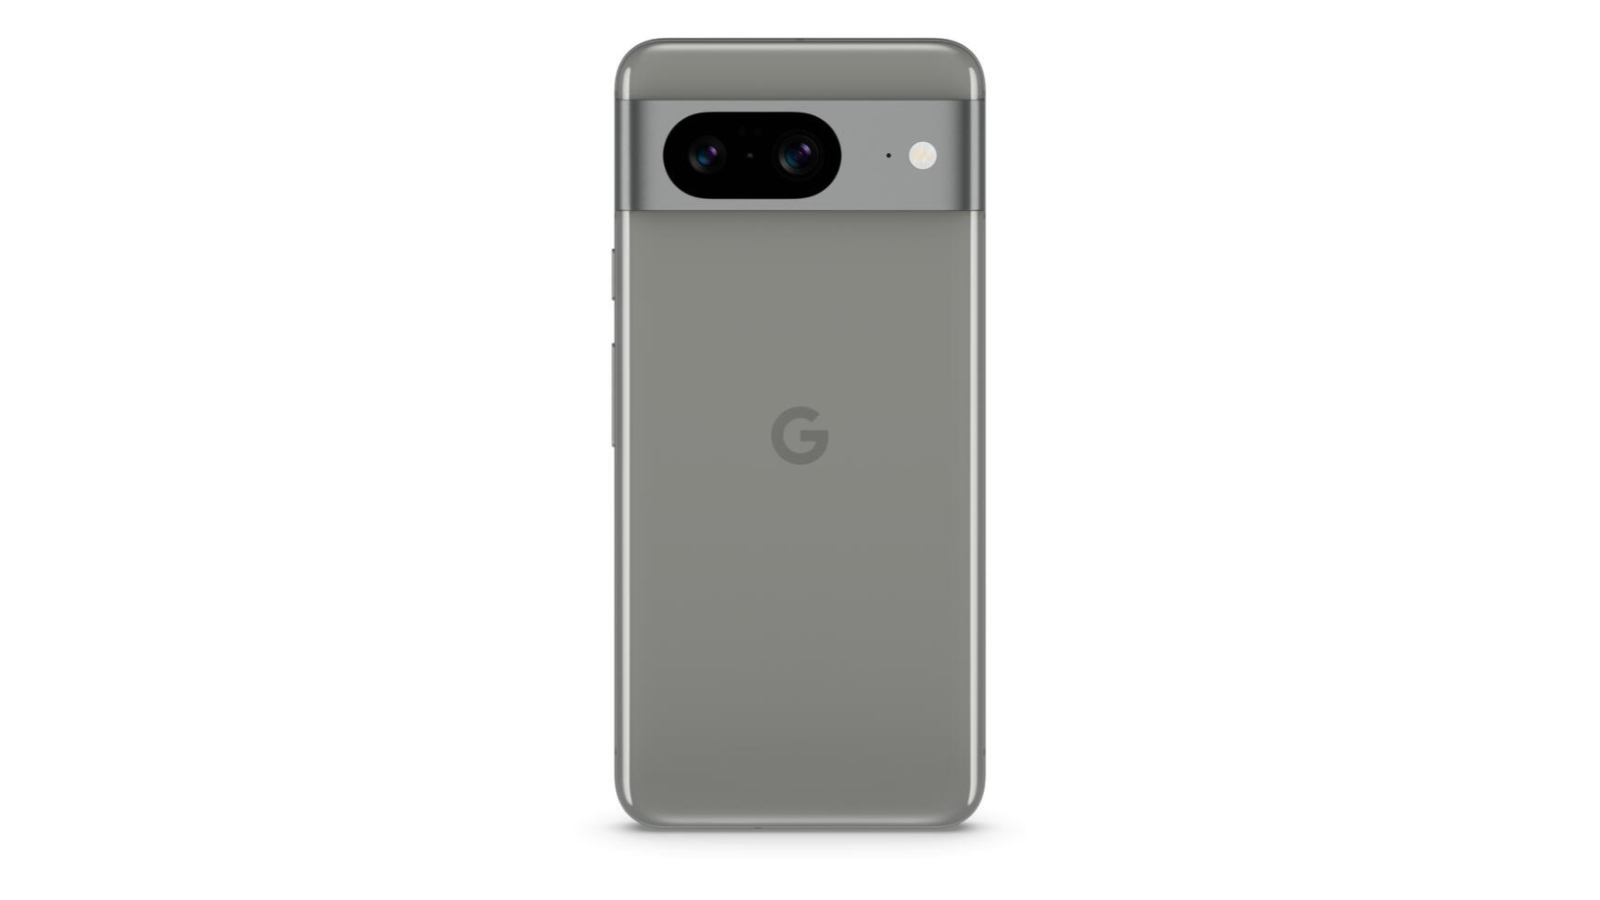 Google Pixel 8 128GB (Unlocked) Rose GA04856-US - Best Buy